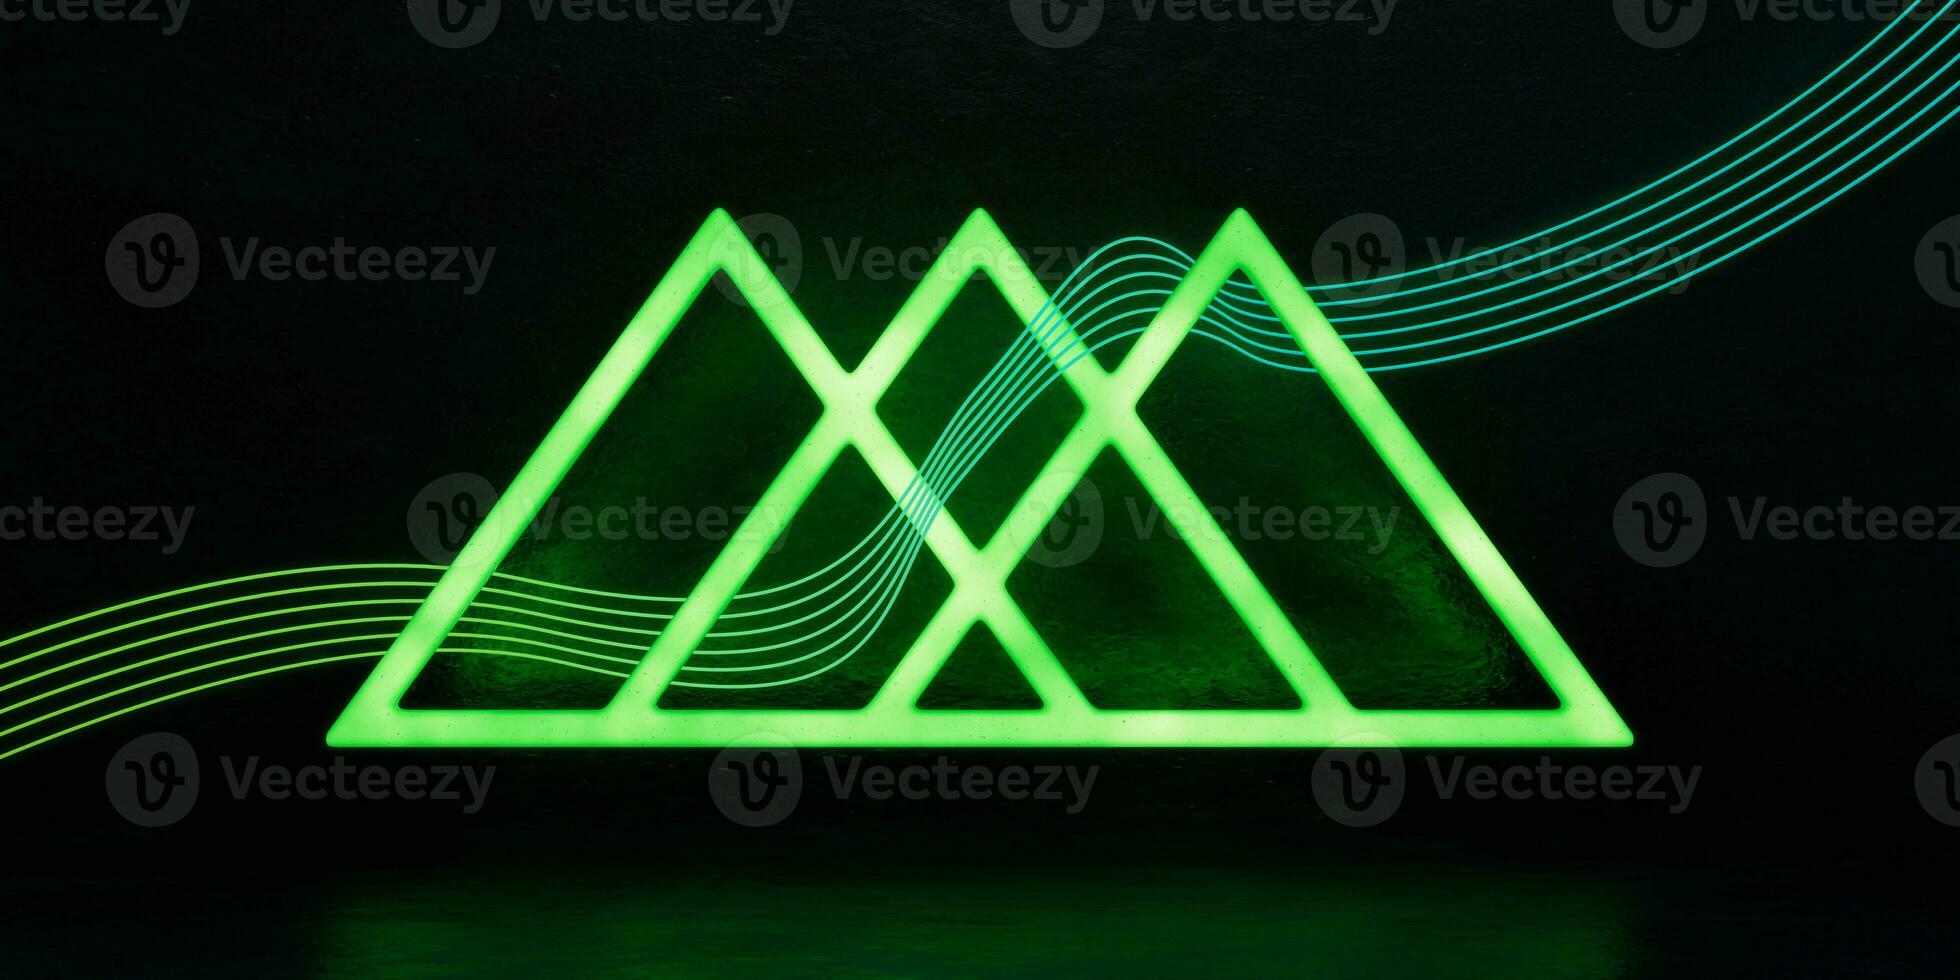 Triangular neon lights, illustrator Background. photo